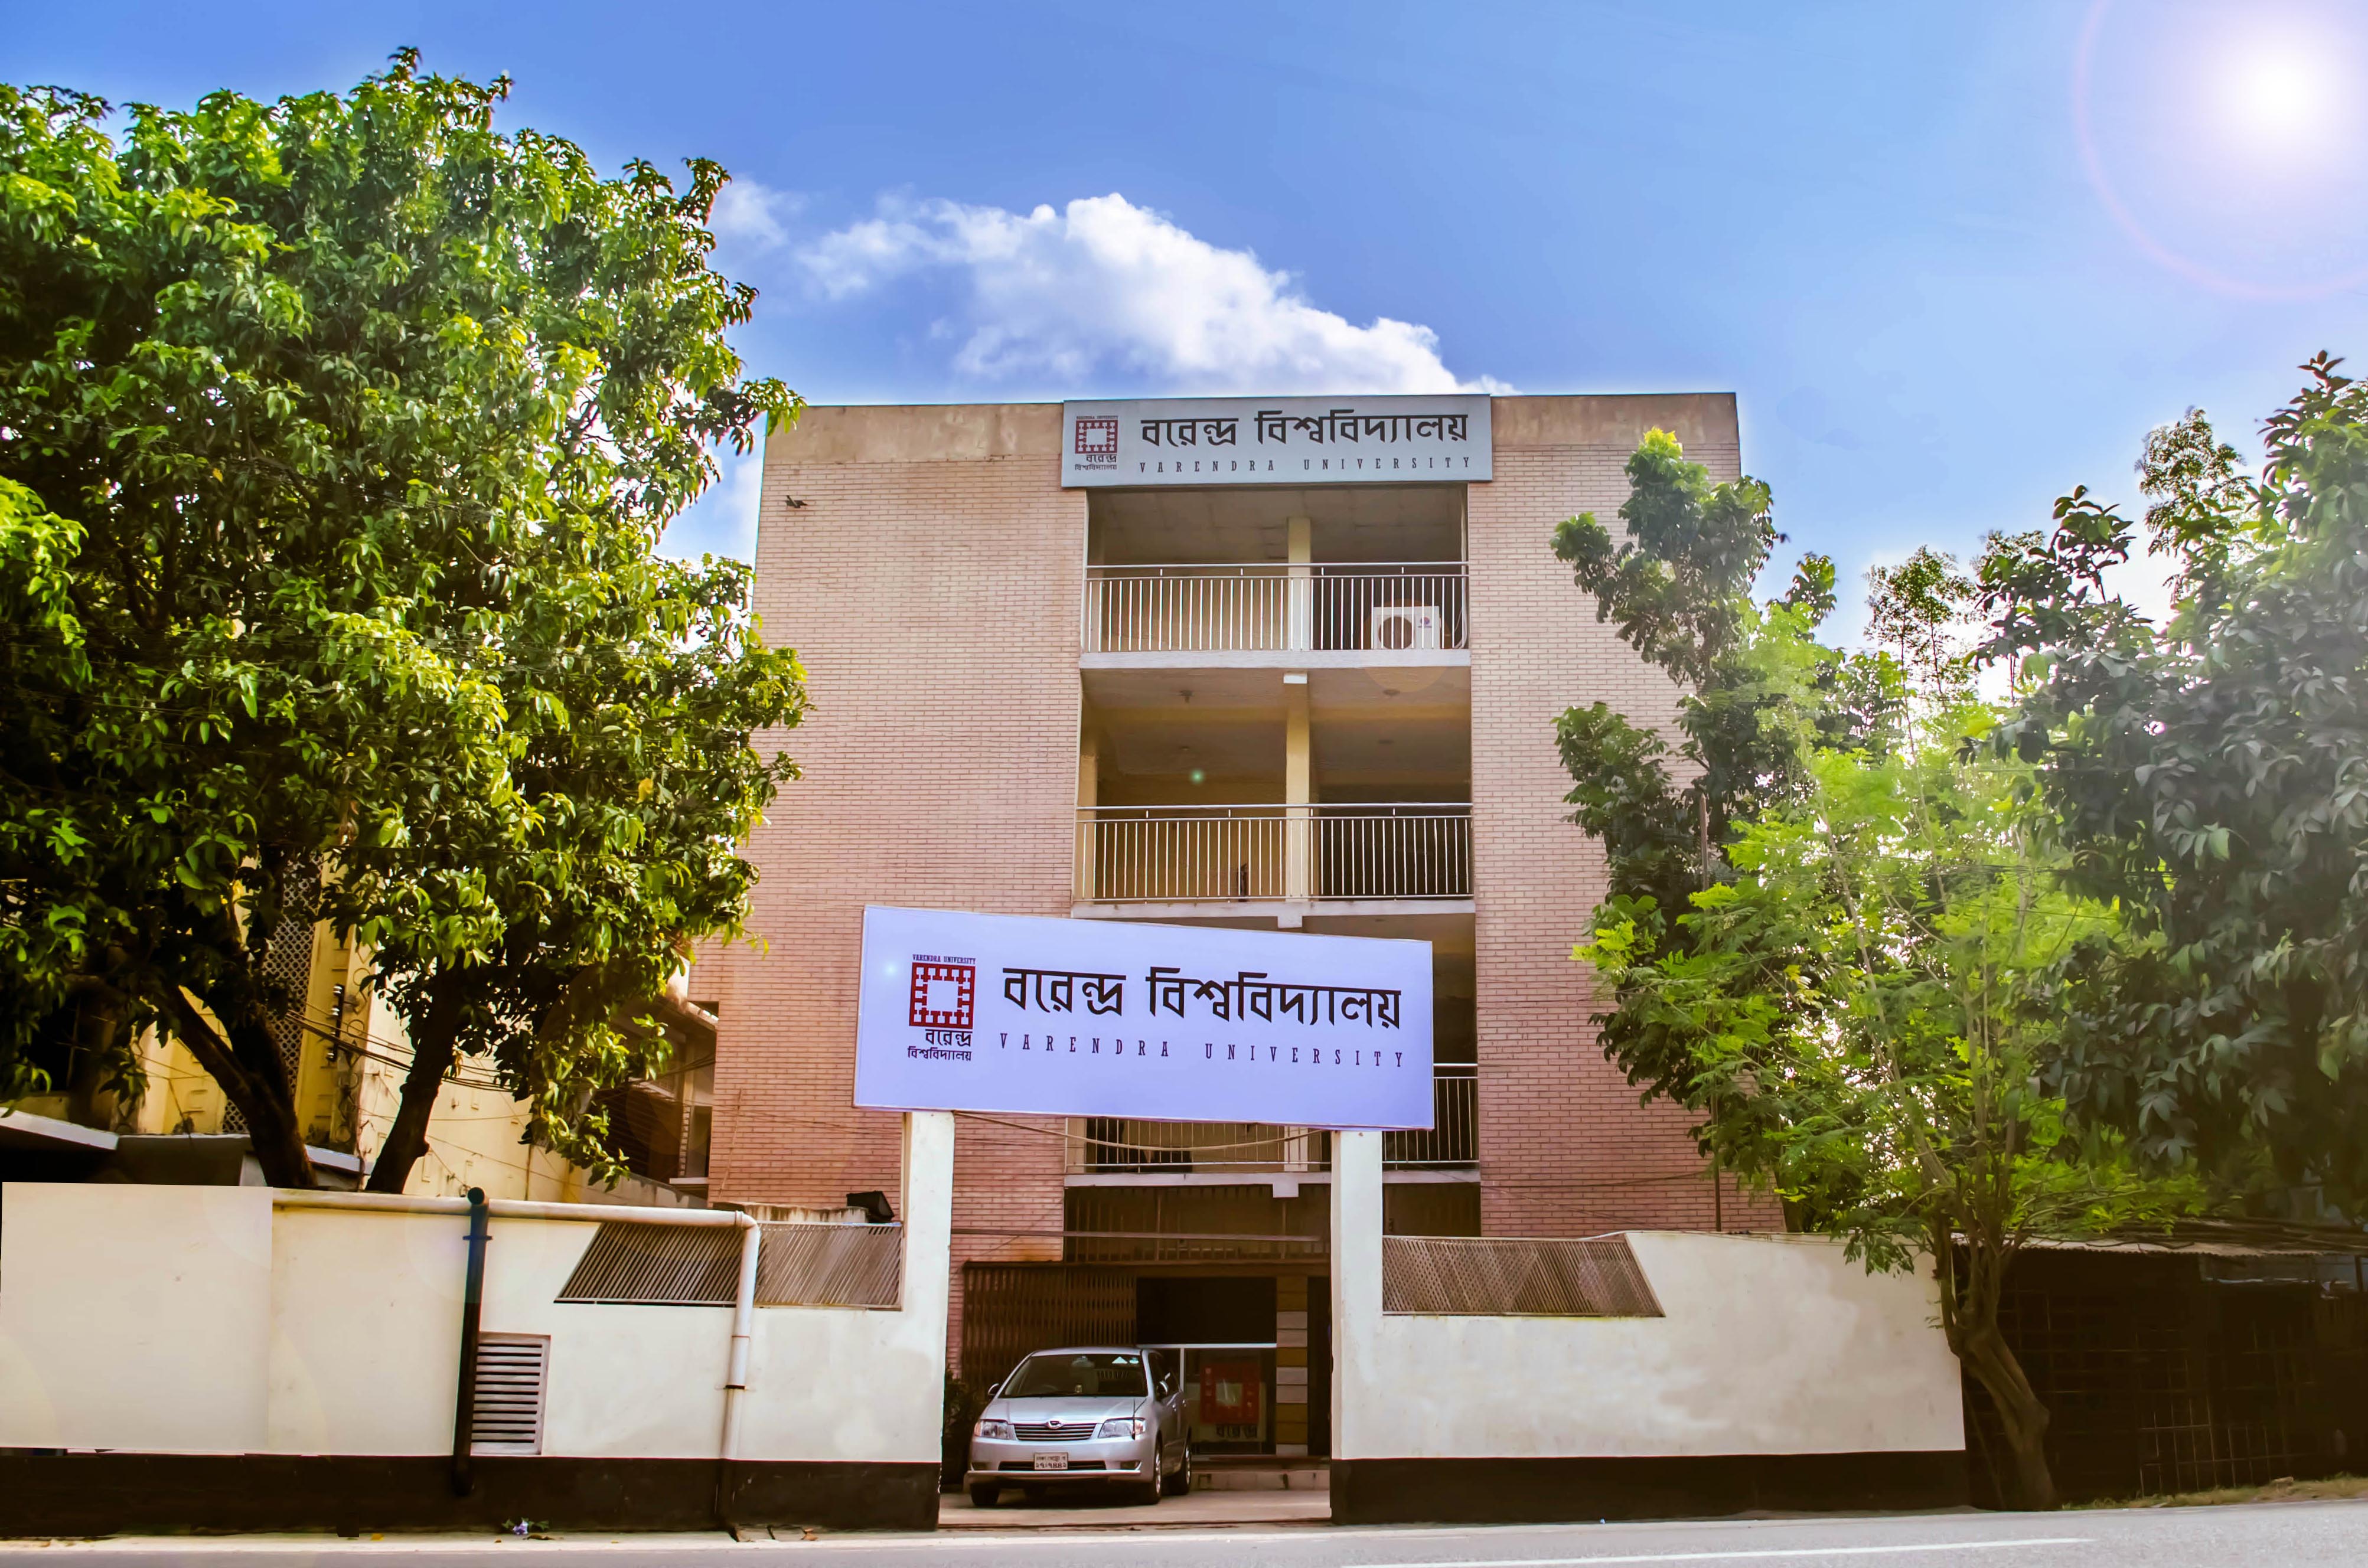 Varendra University admission